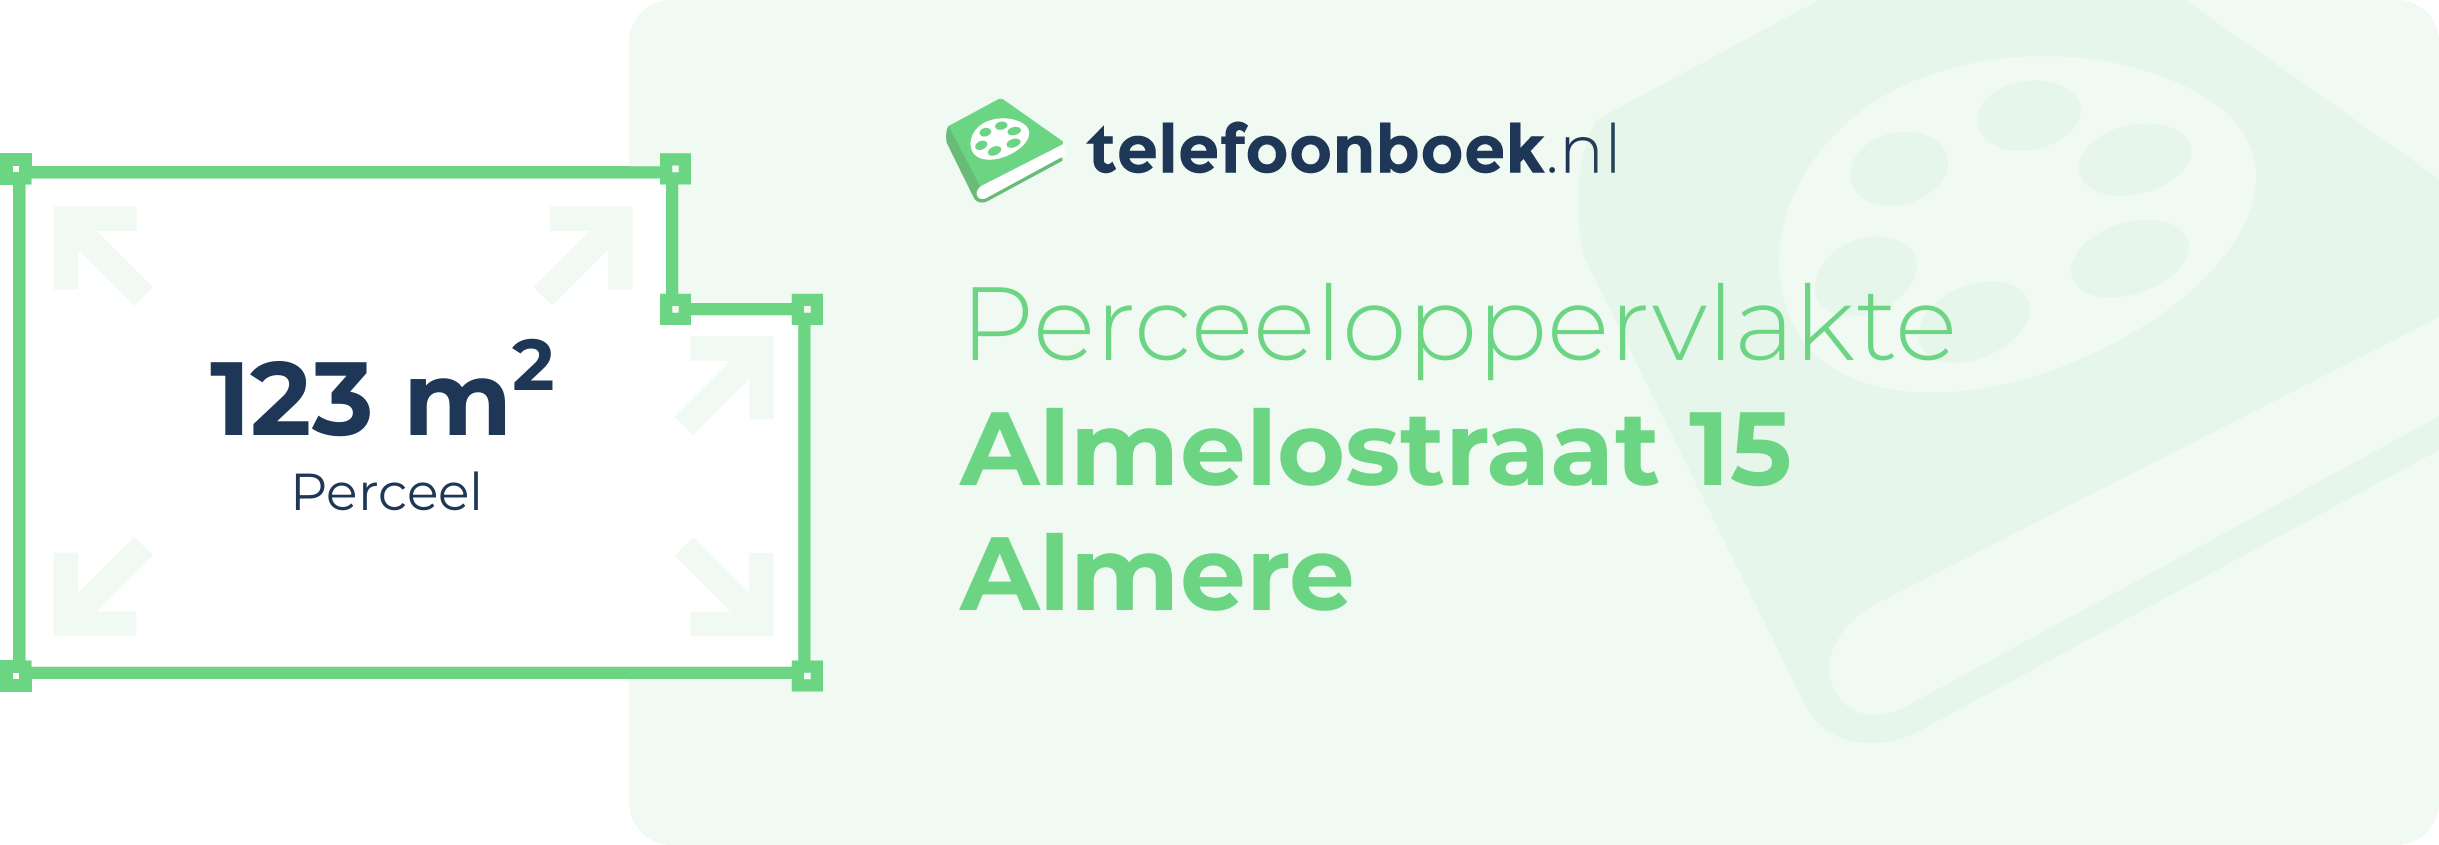 Perceeloppervlakte Almelostraat 15 Almere